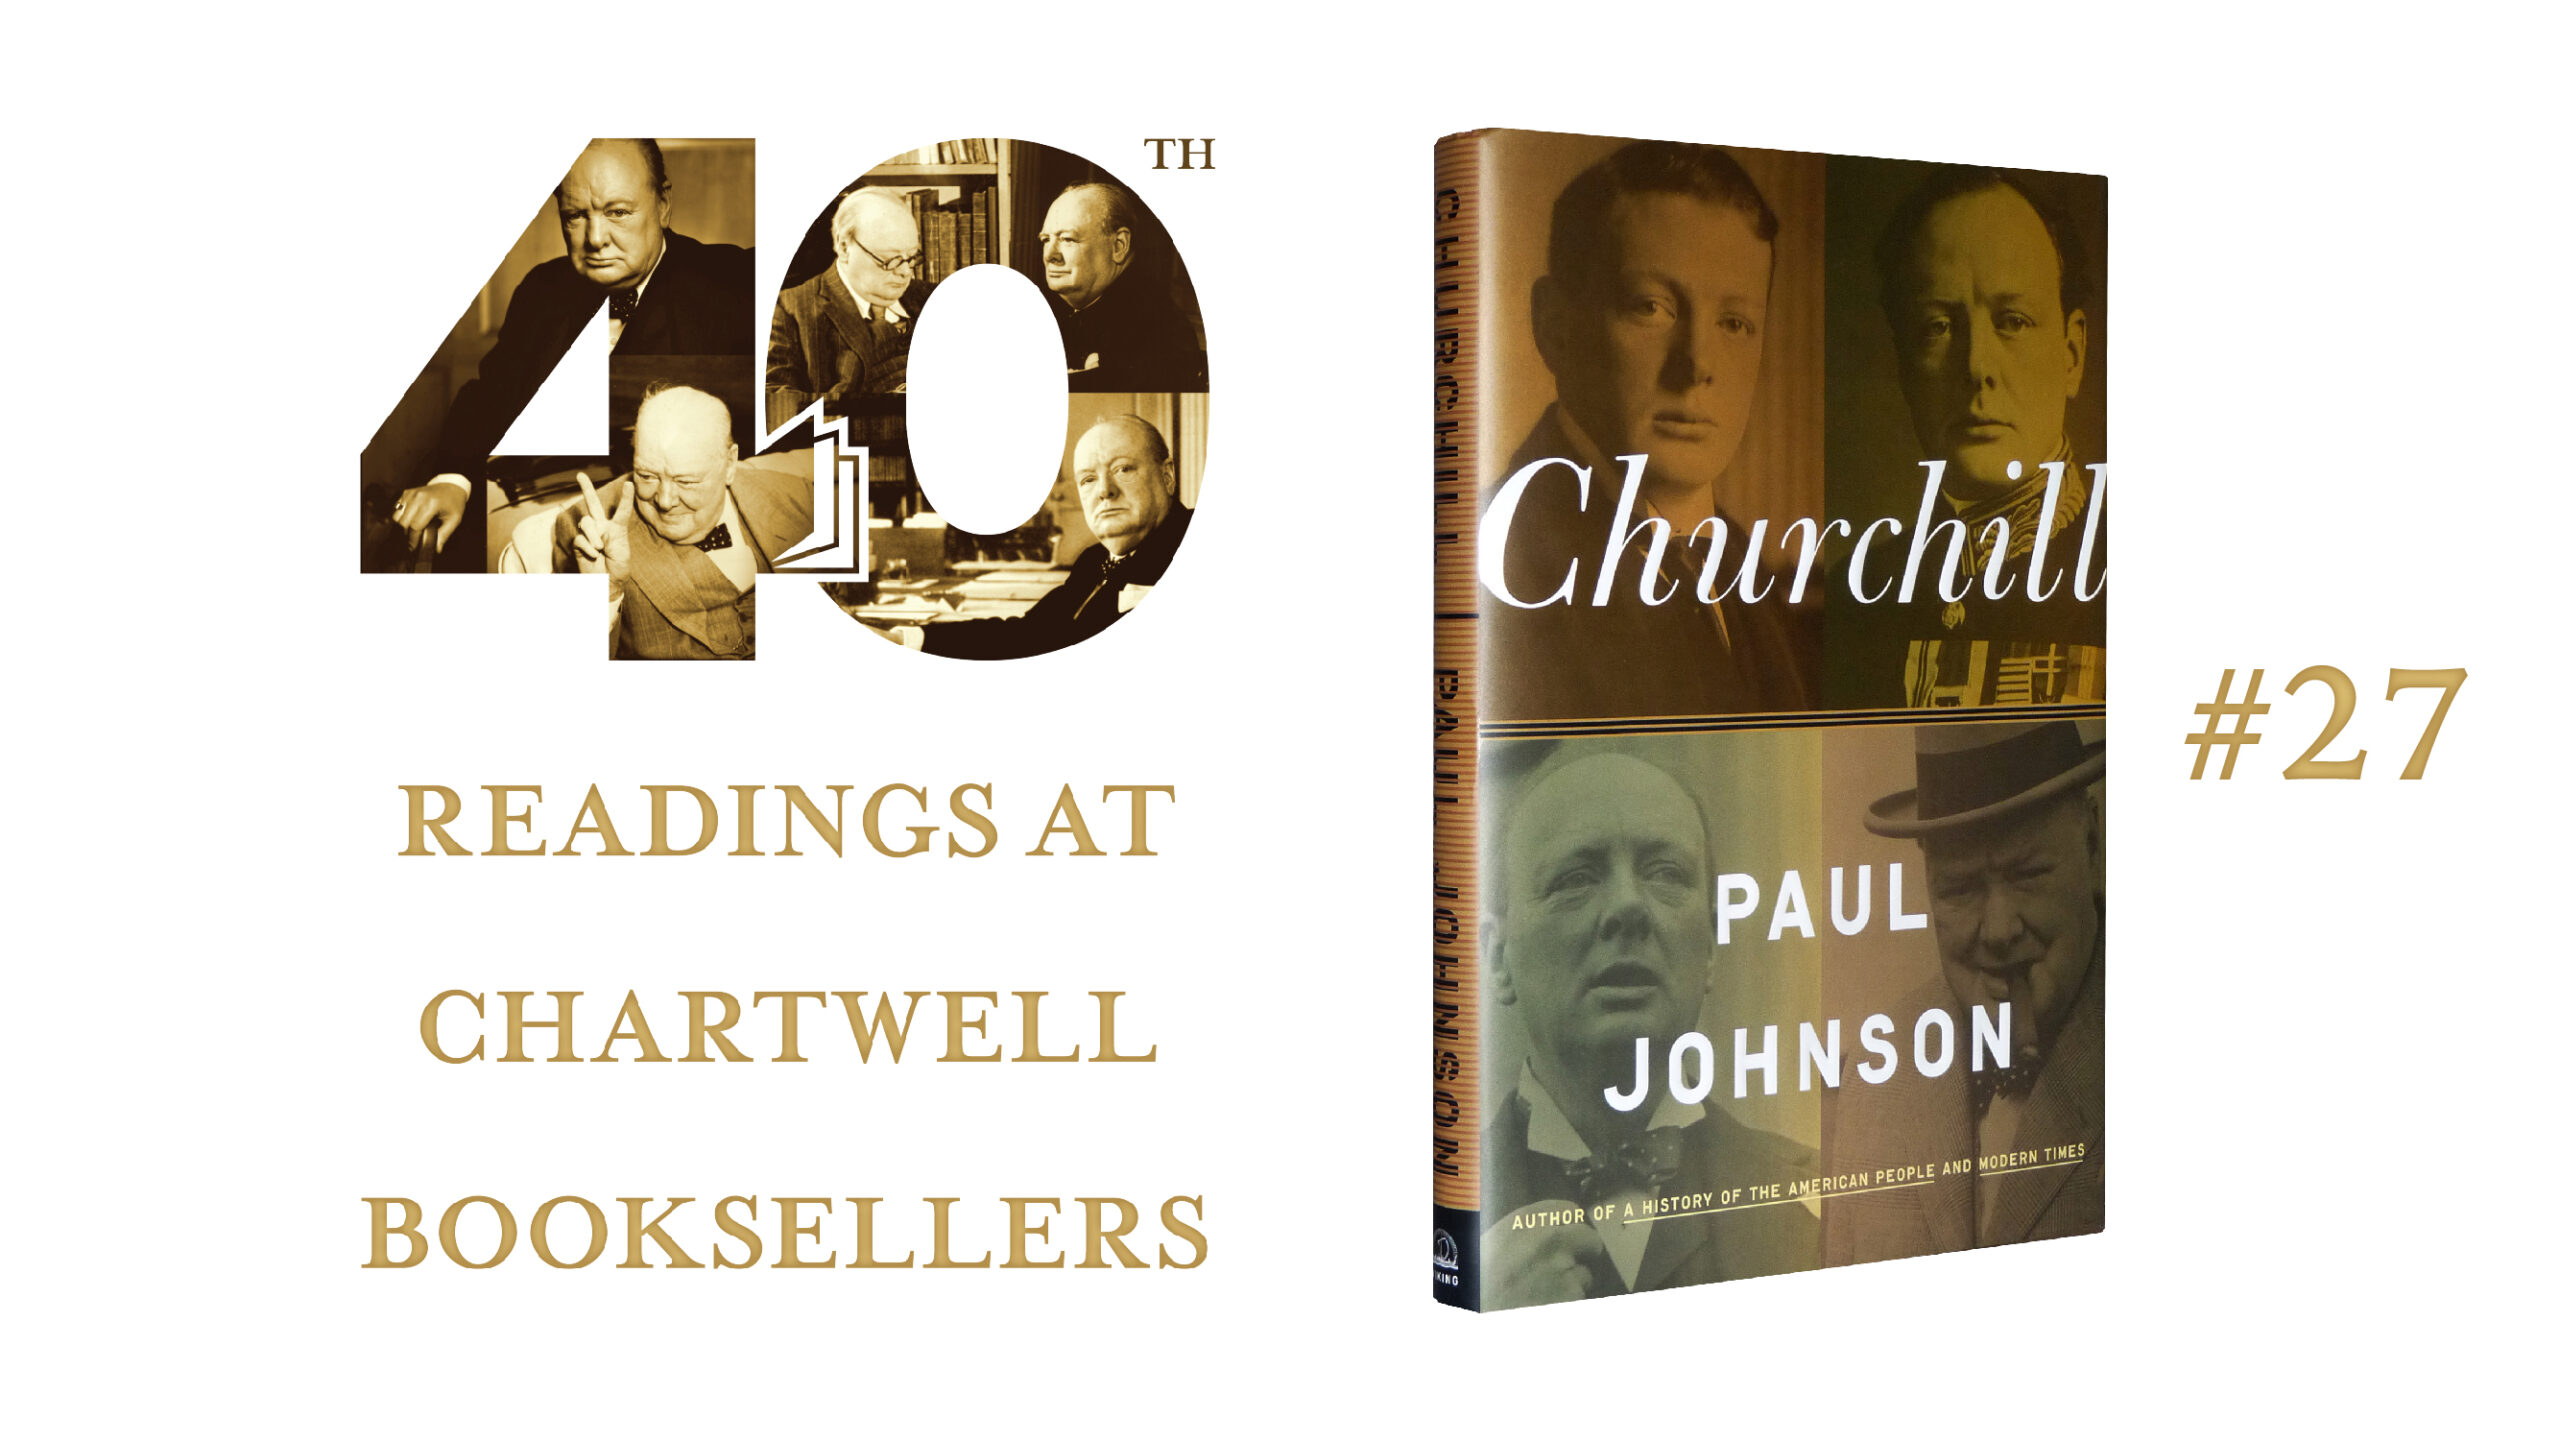 WATCH EVAN HANDLER READ “CHURCHILL” BY PAUL JOHNSON